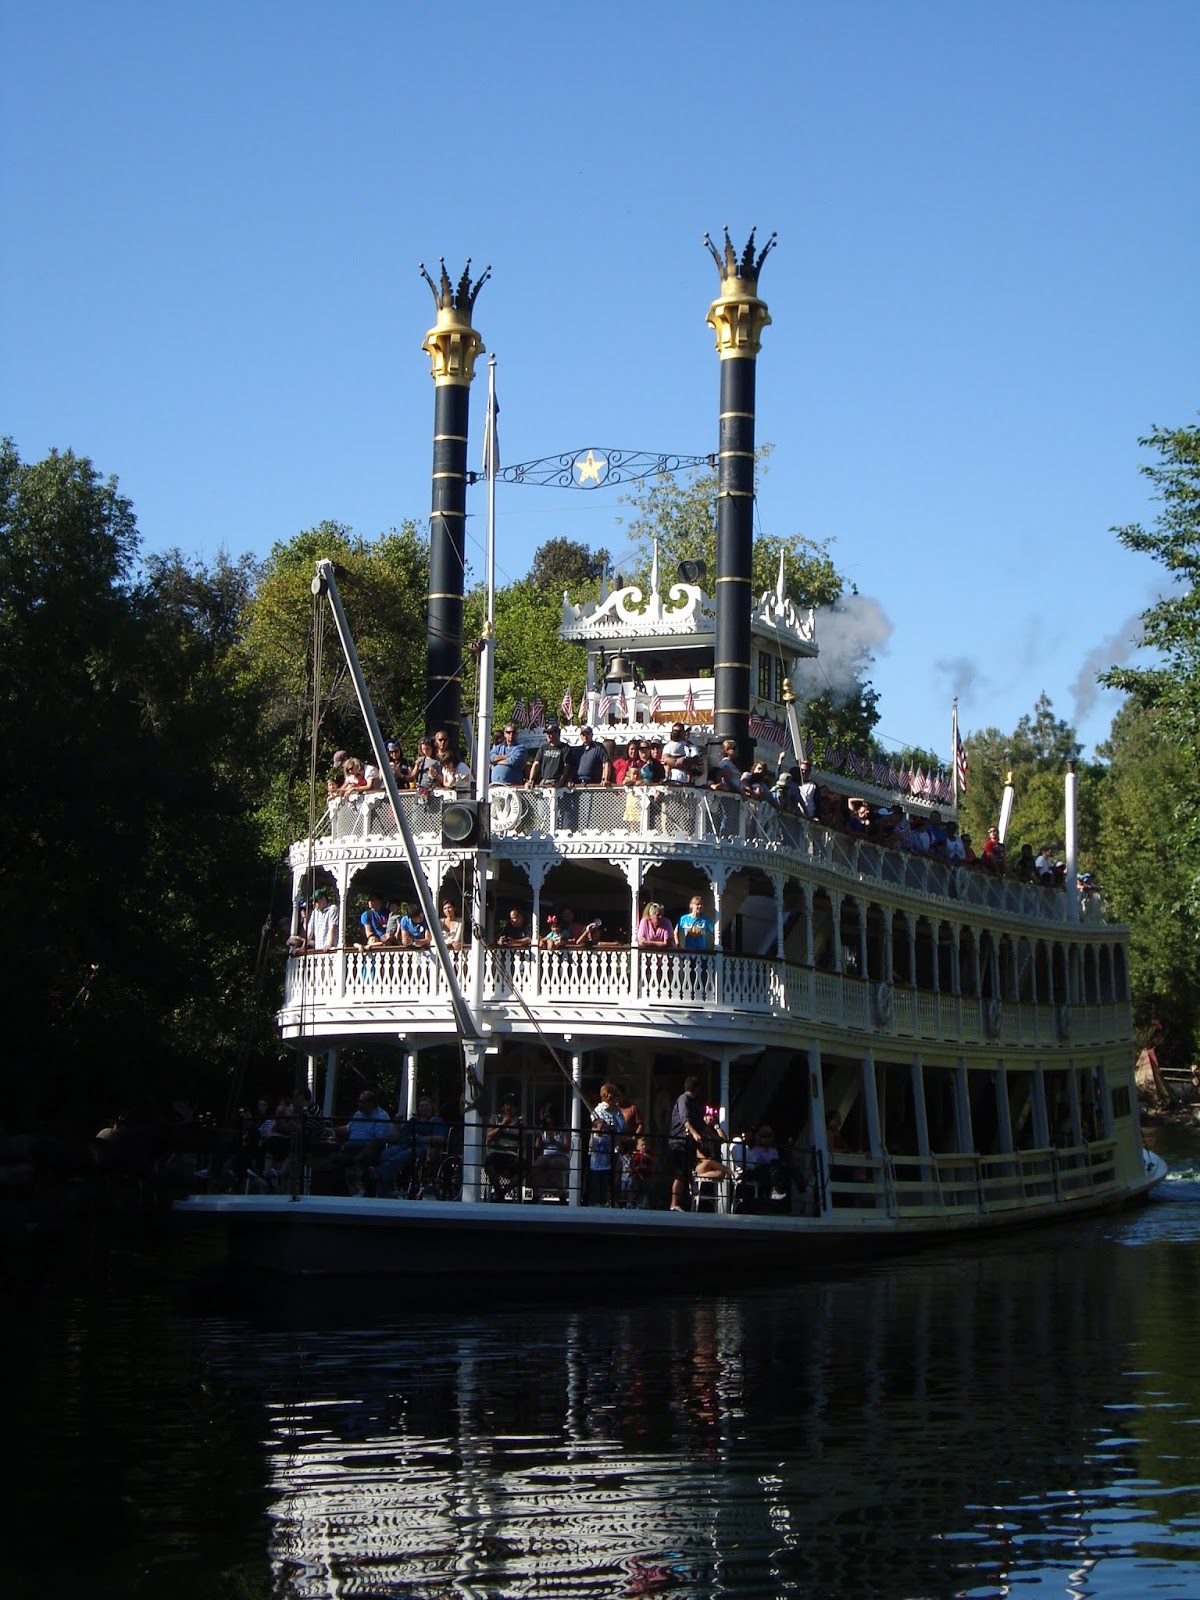 The Riveting Voyage: Disneylands Mark Twain Riverboat Story